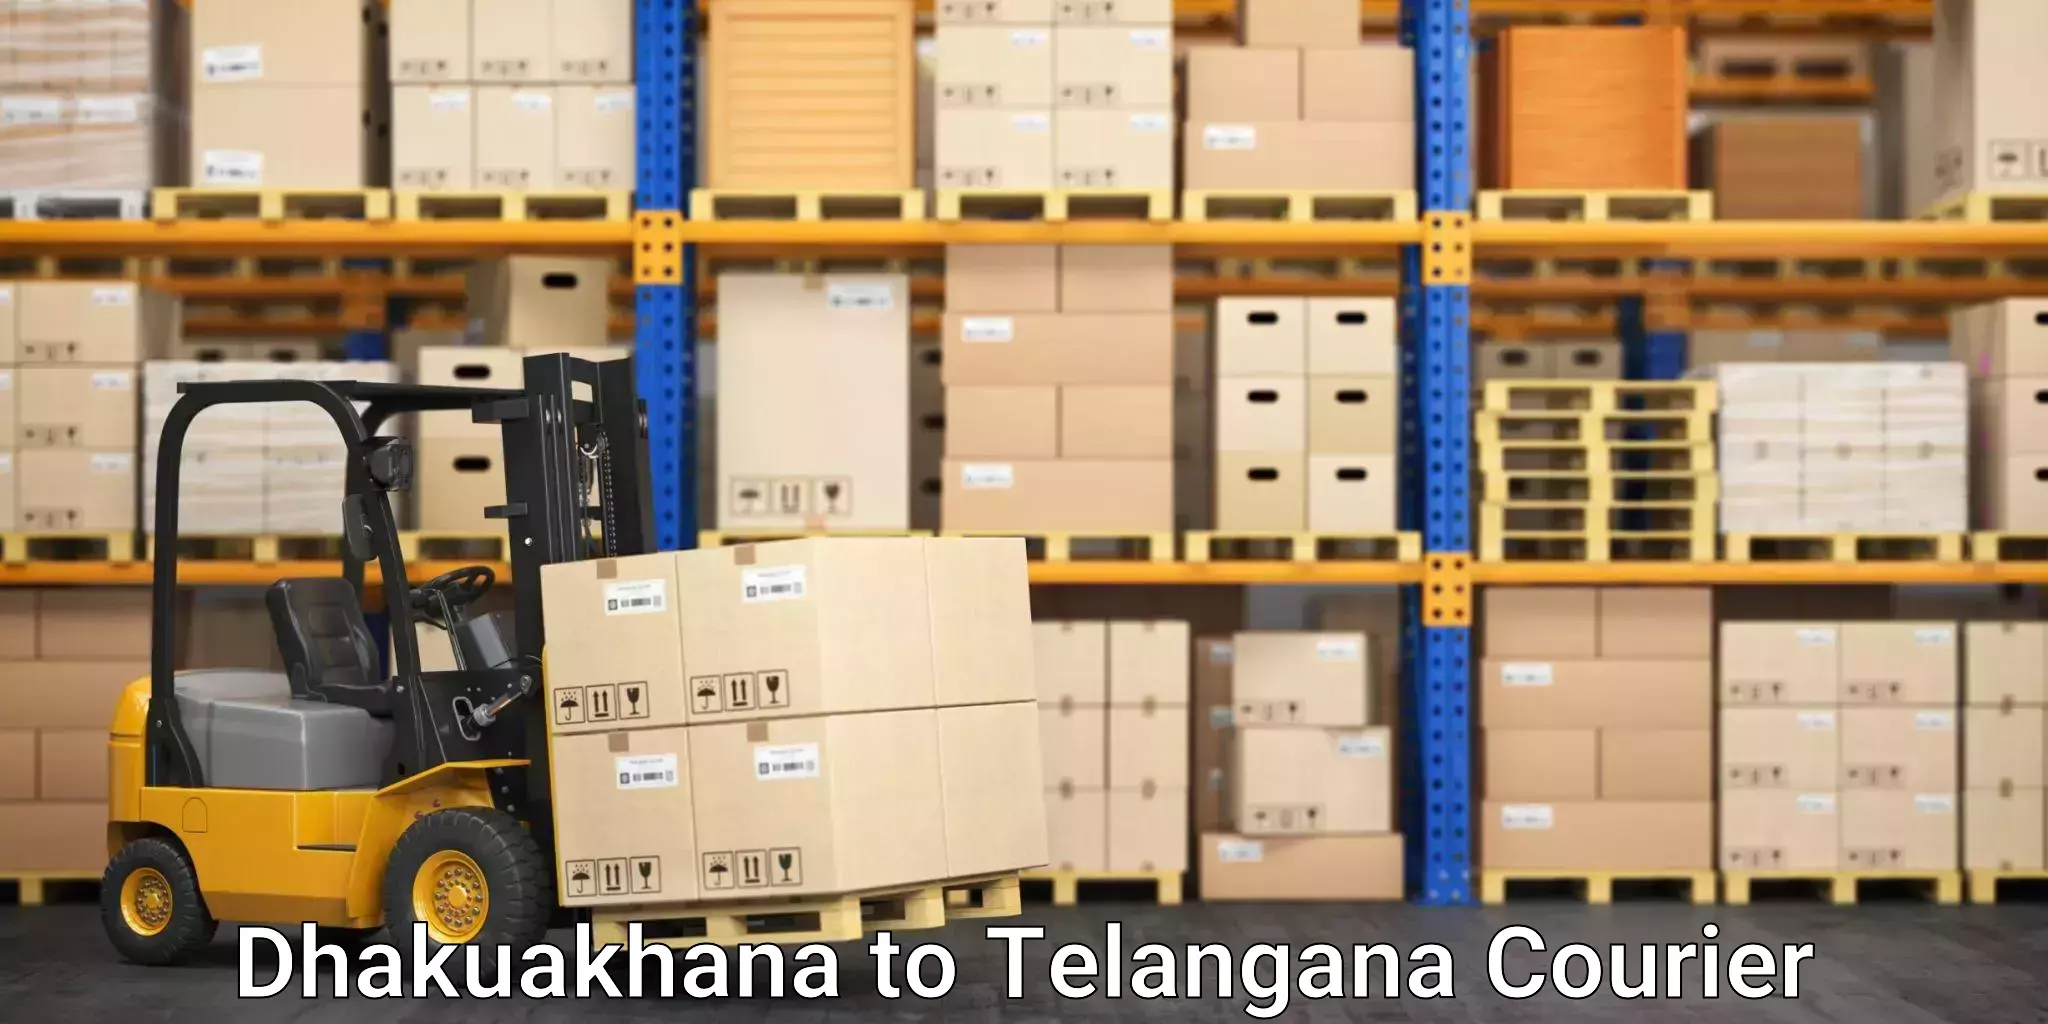 High-speed parcel service Dhakuakhana to Nirmal